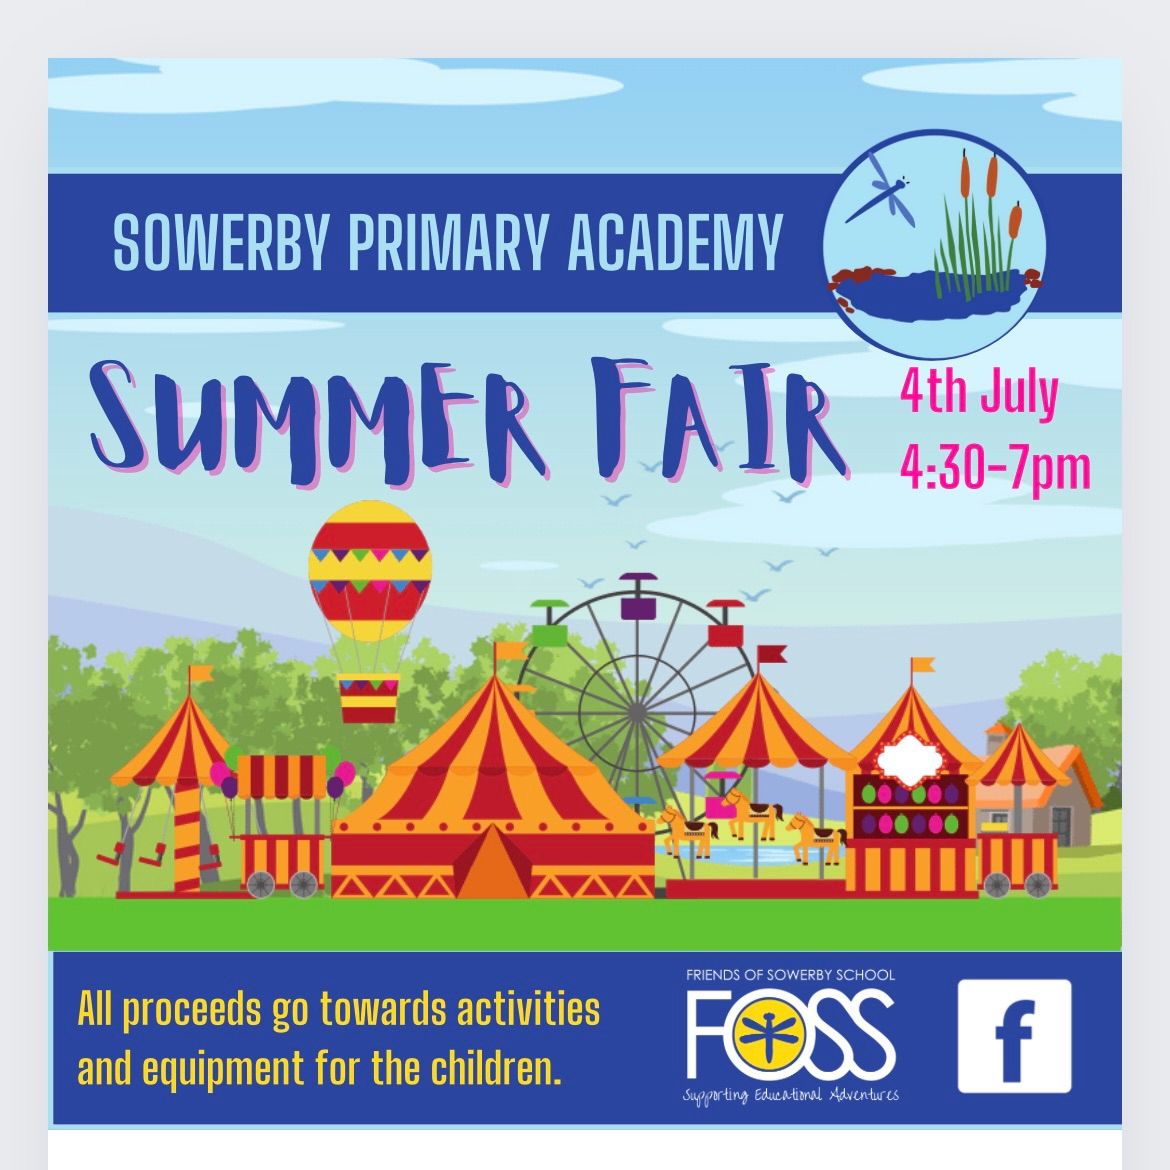 Sowerby Primary Academy Summer Fair